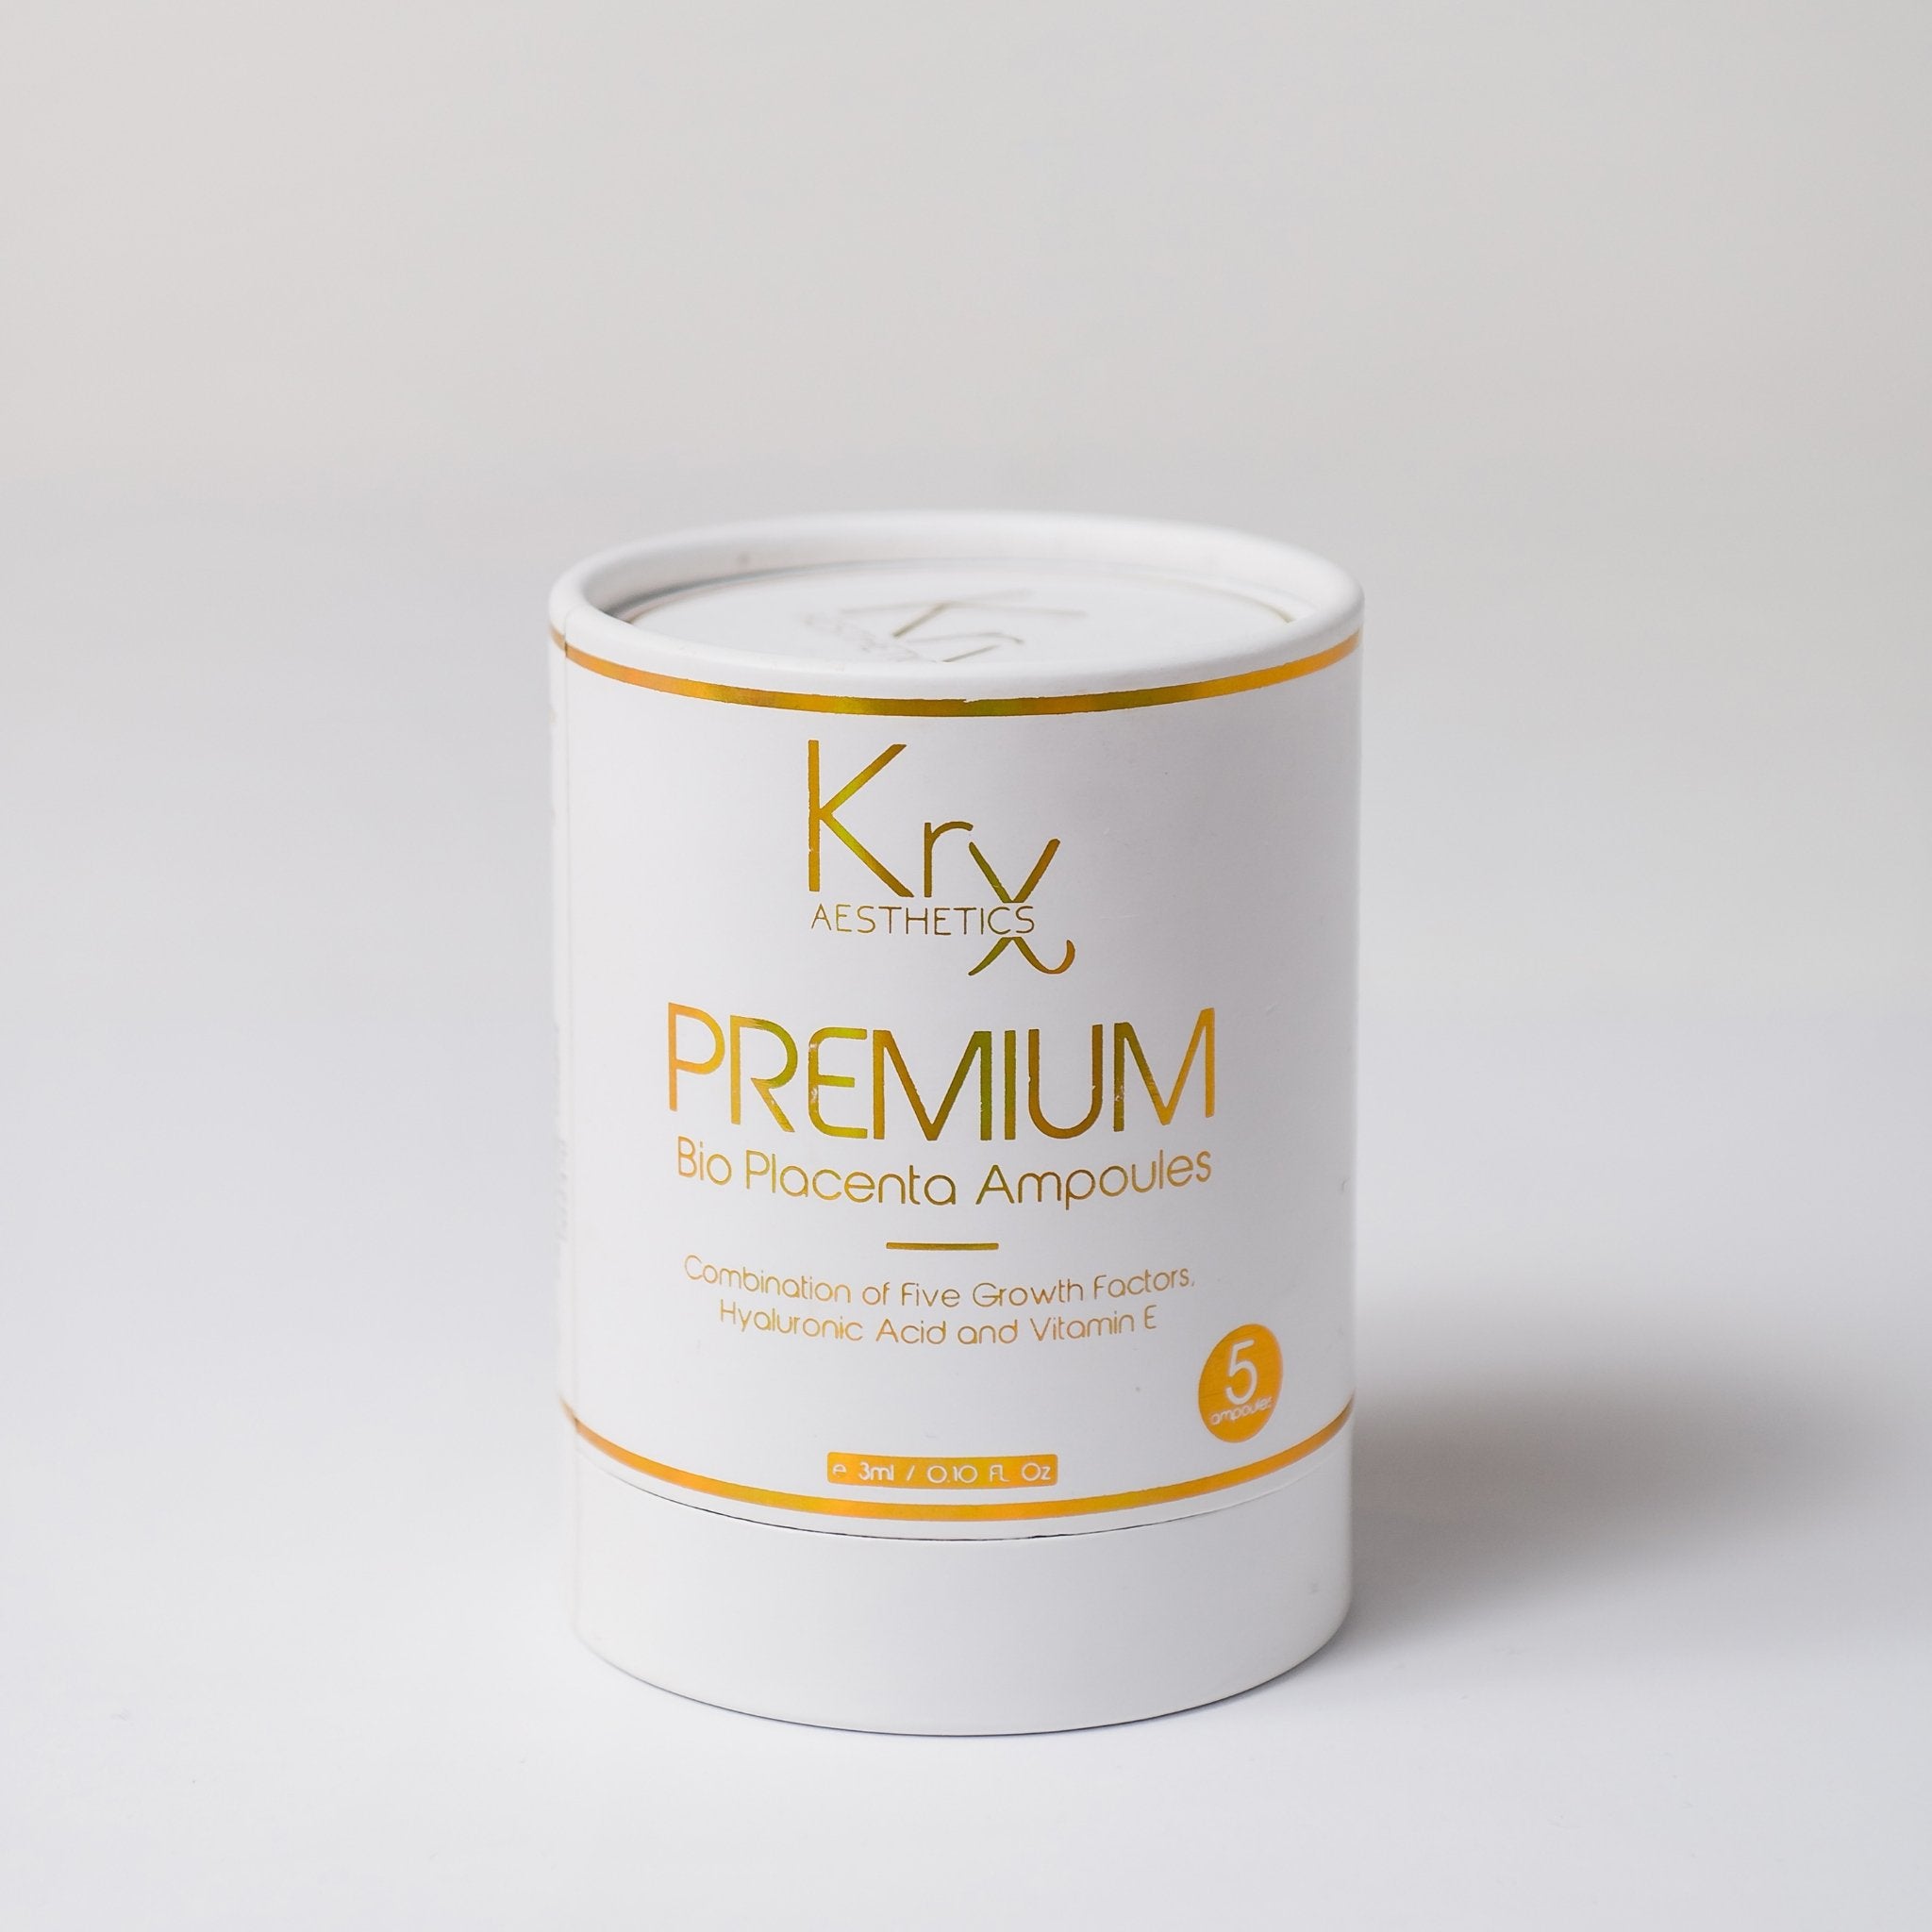 KrX Premium Bio Placenta Ampoule - by Kin Aesthetics 